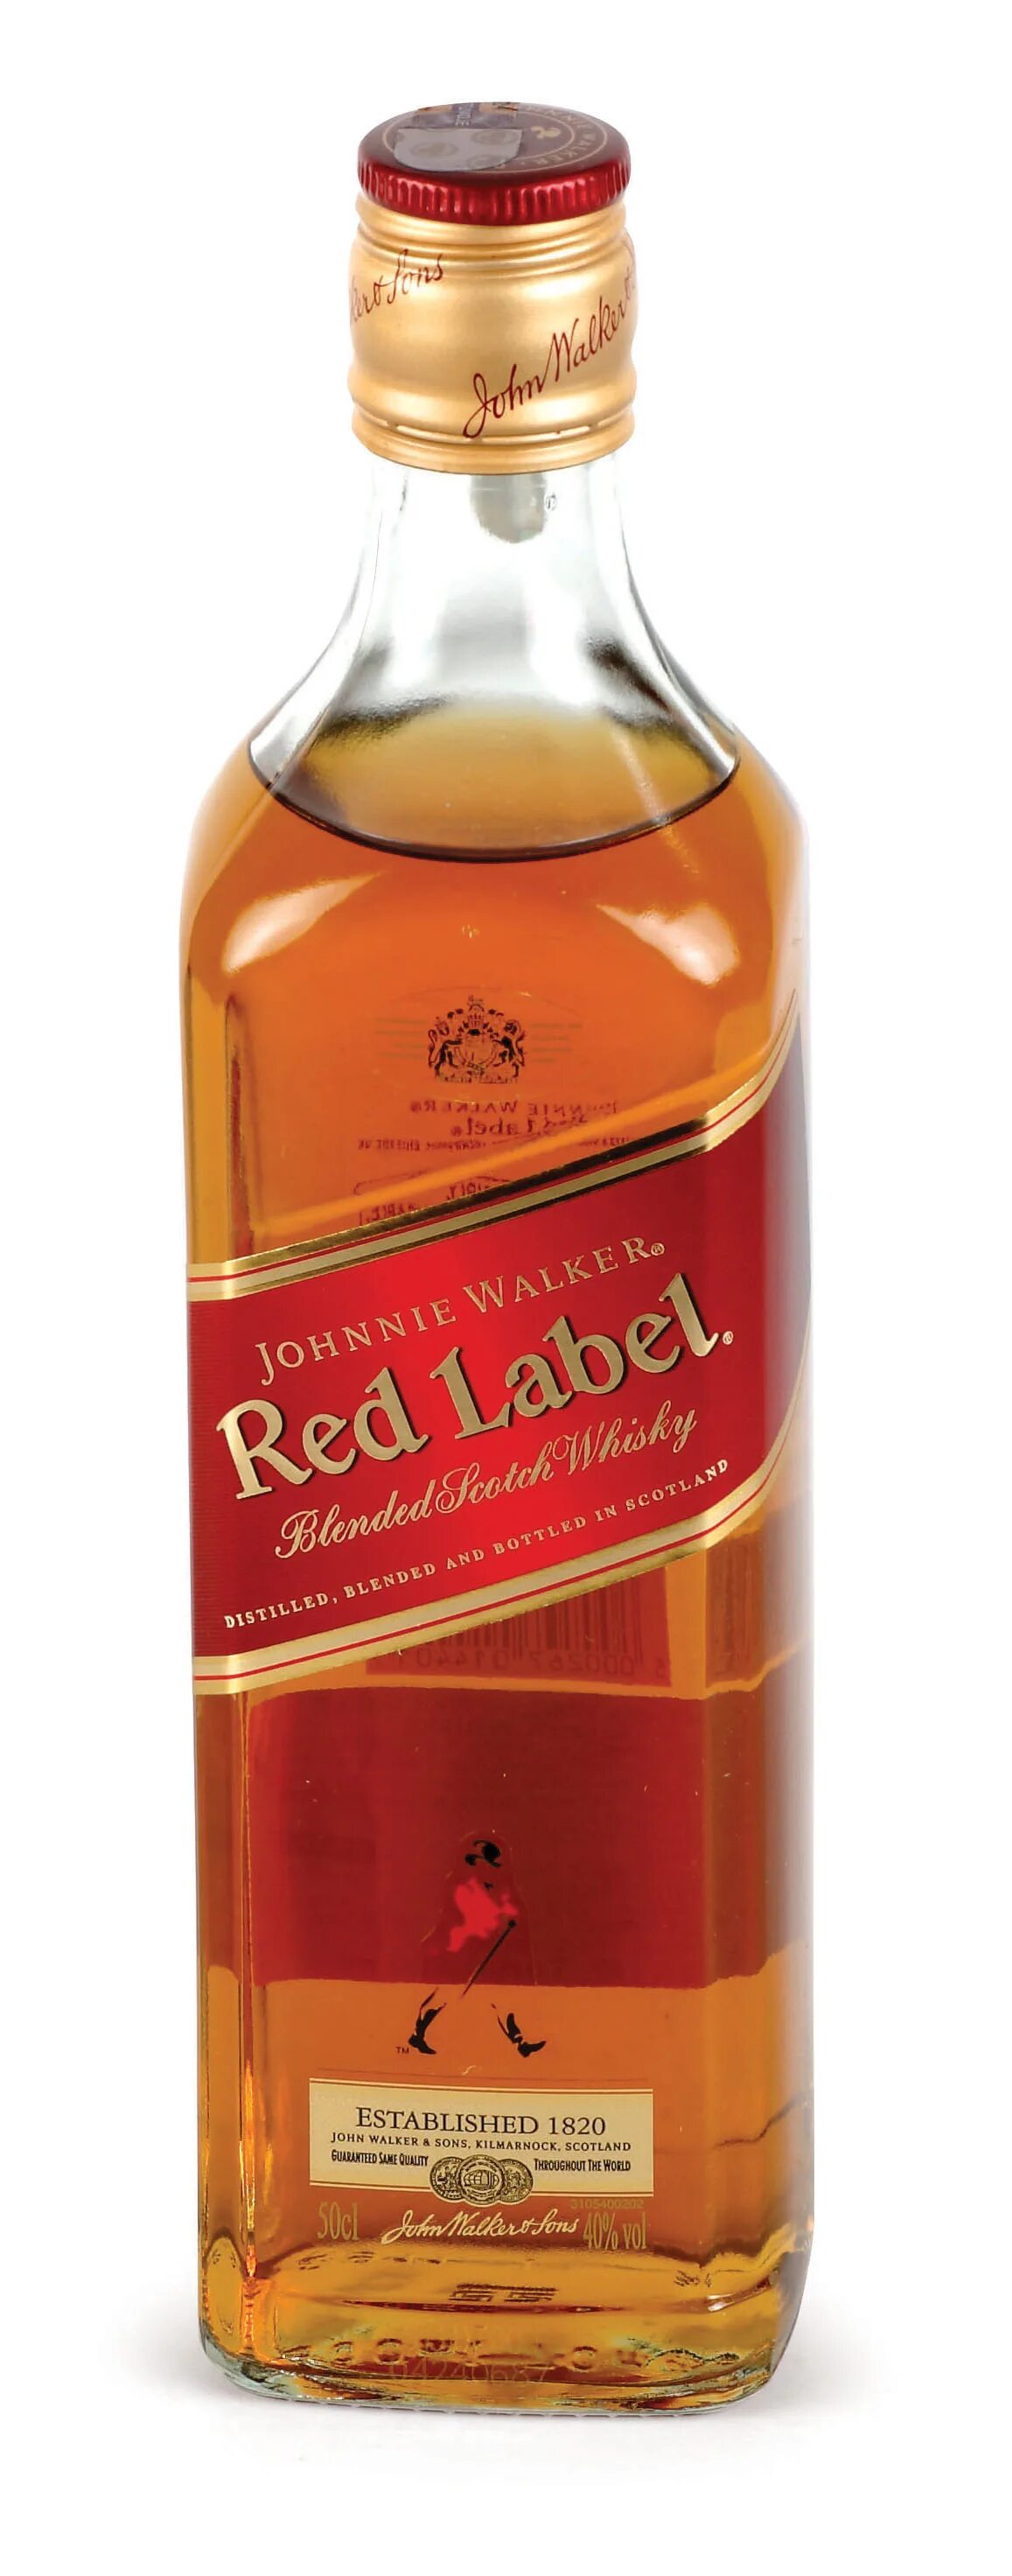 Johnnie Walker Red Label 0.05 л. Виски Джонни Уокер ред лейбл 40 0.5л. Johnnie Walker Red Label 0.5. Виски Джонни Уокер ред лейбл 40 0.5л Шотландия. Ред лейбл 0.5